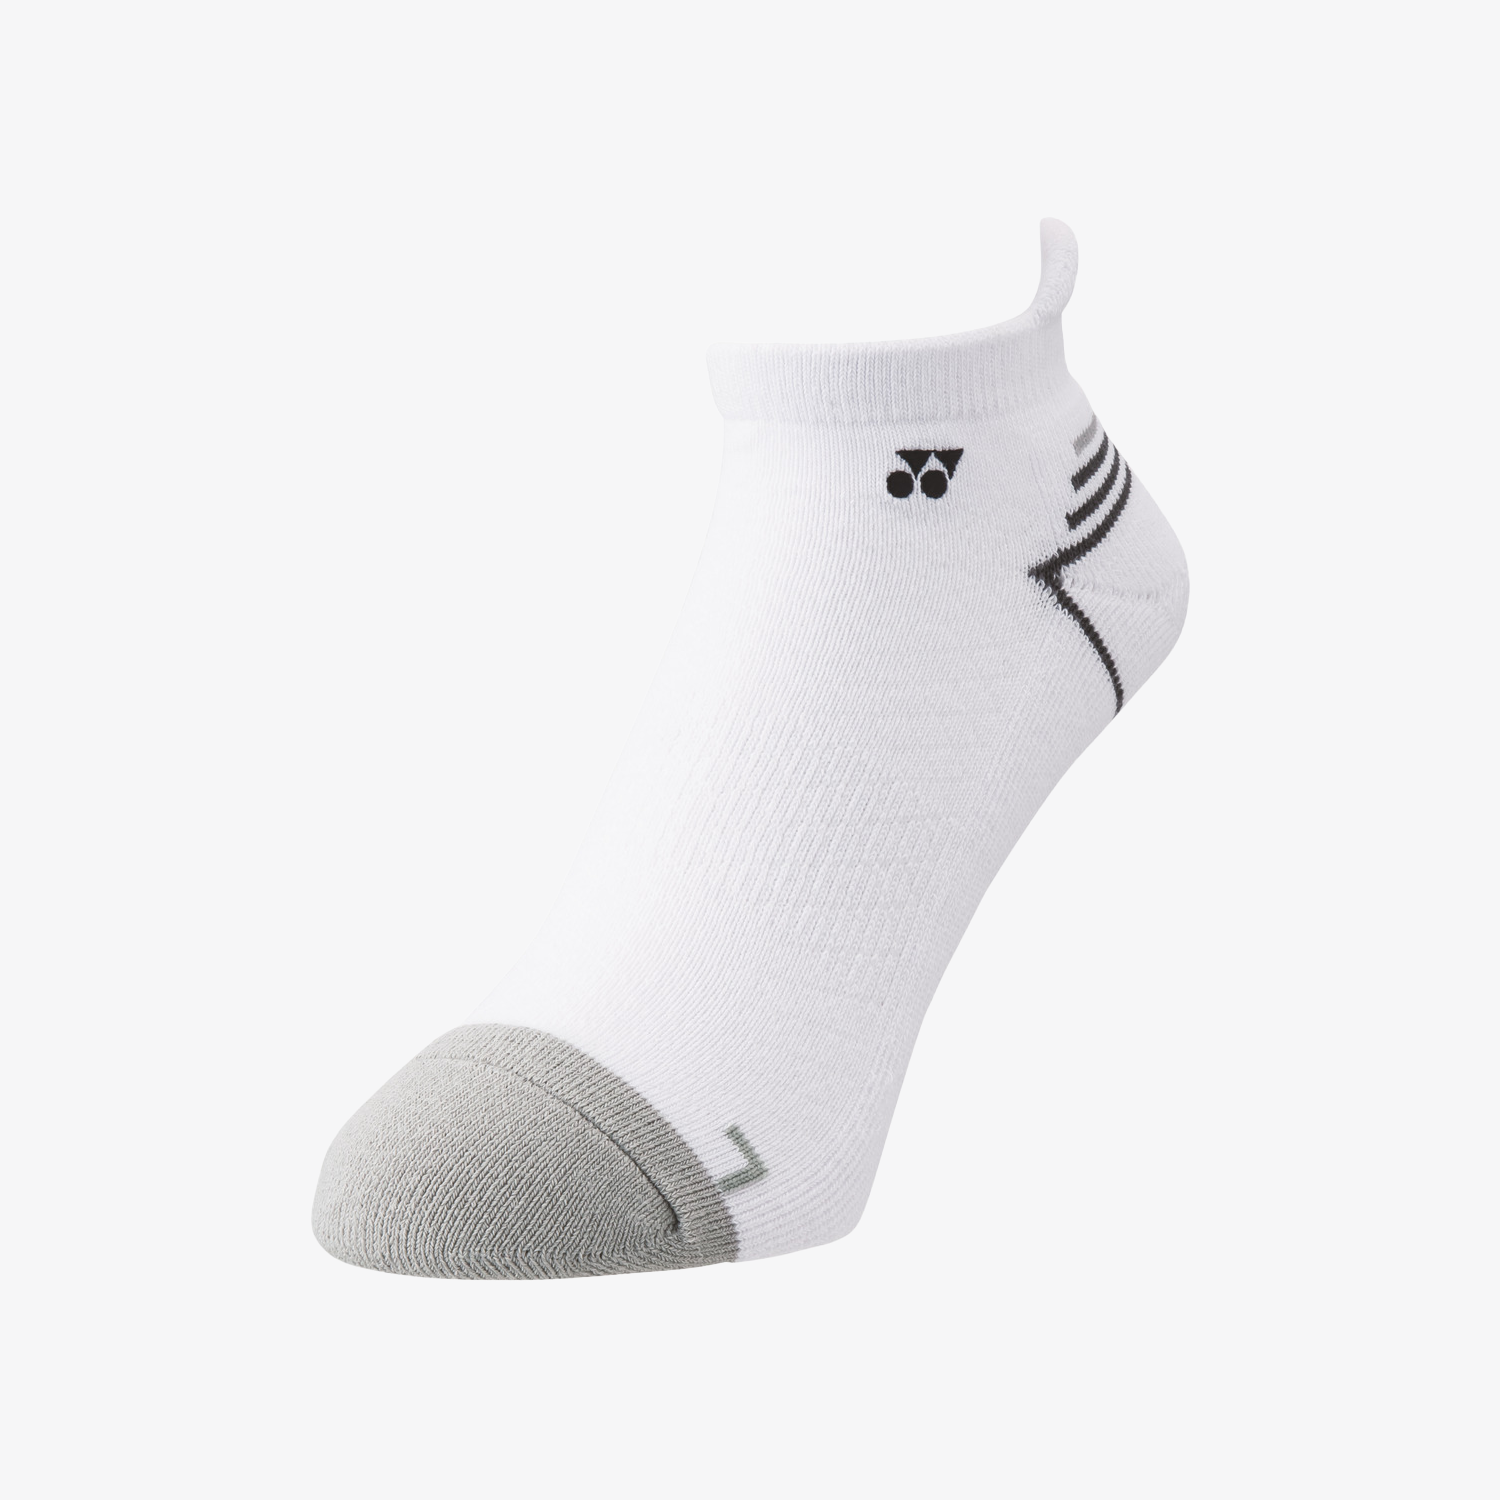 Yonex Men's Socks